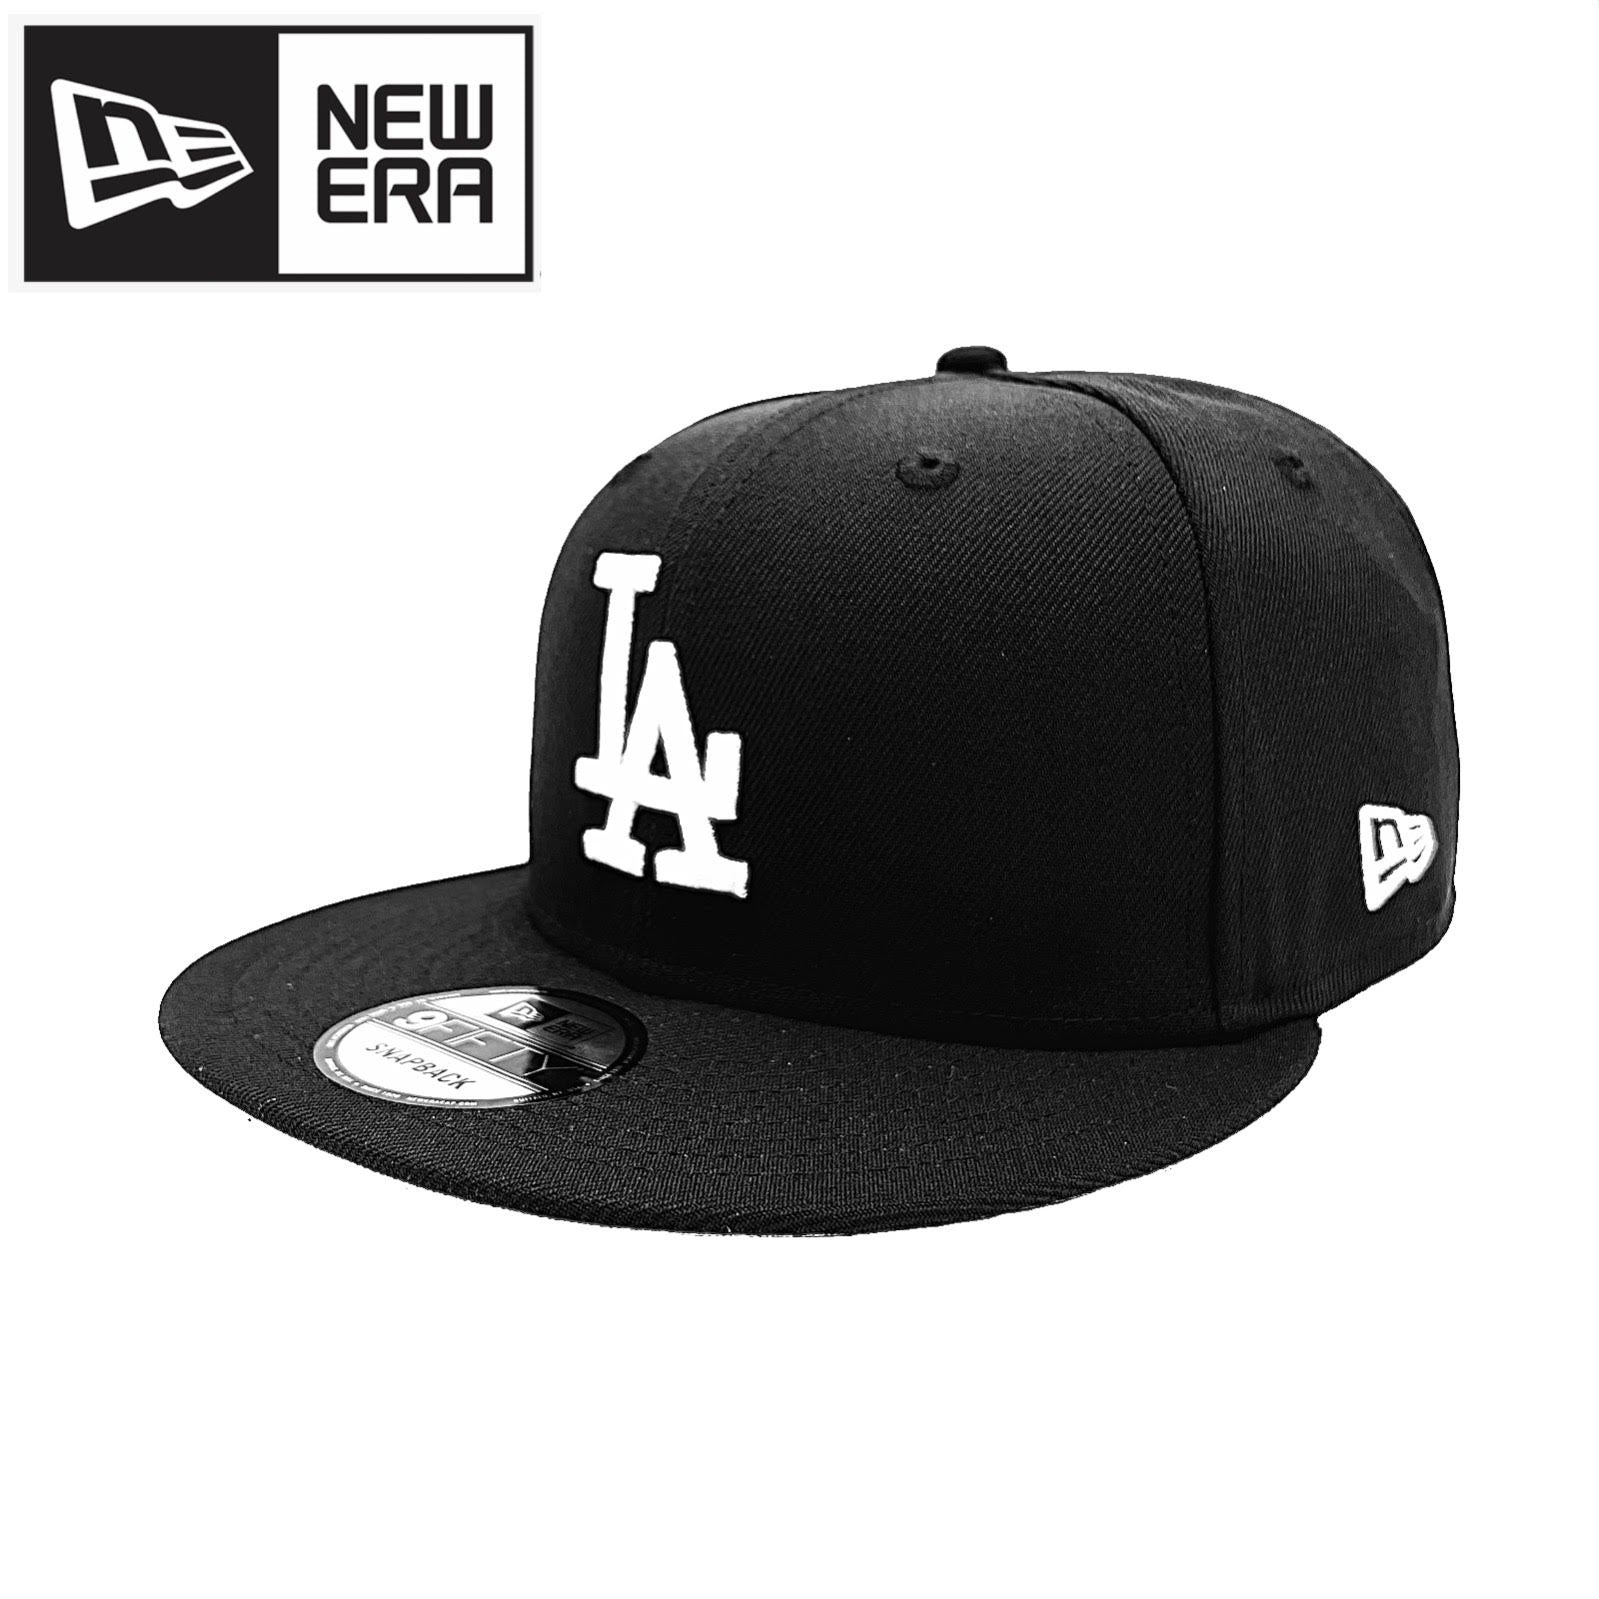 Los Angeles Dodgers New Era Black & White Snapback